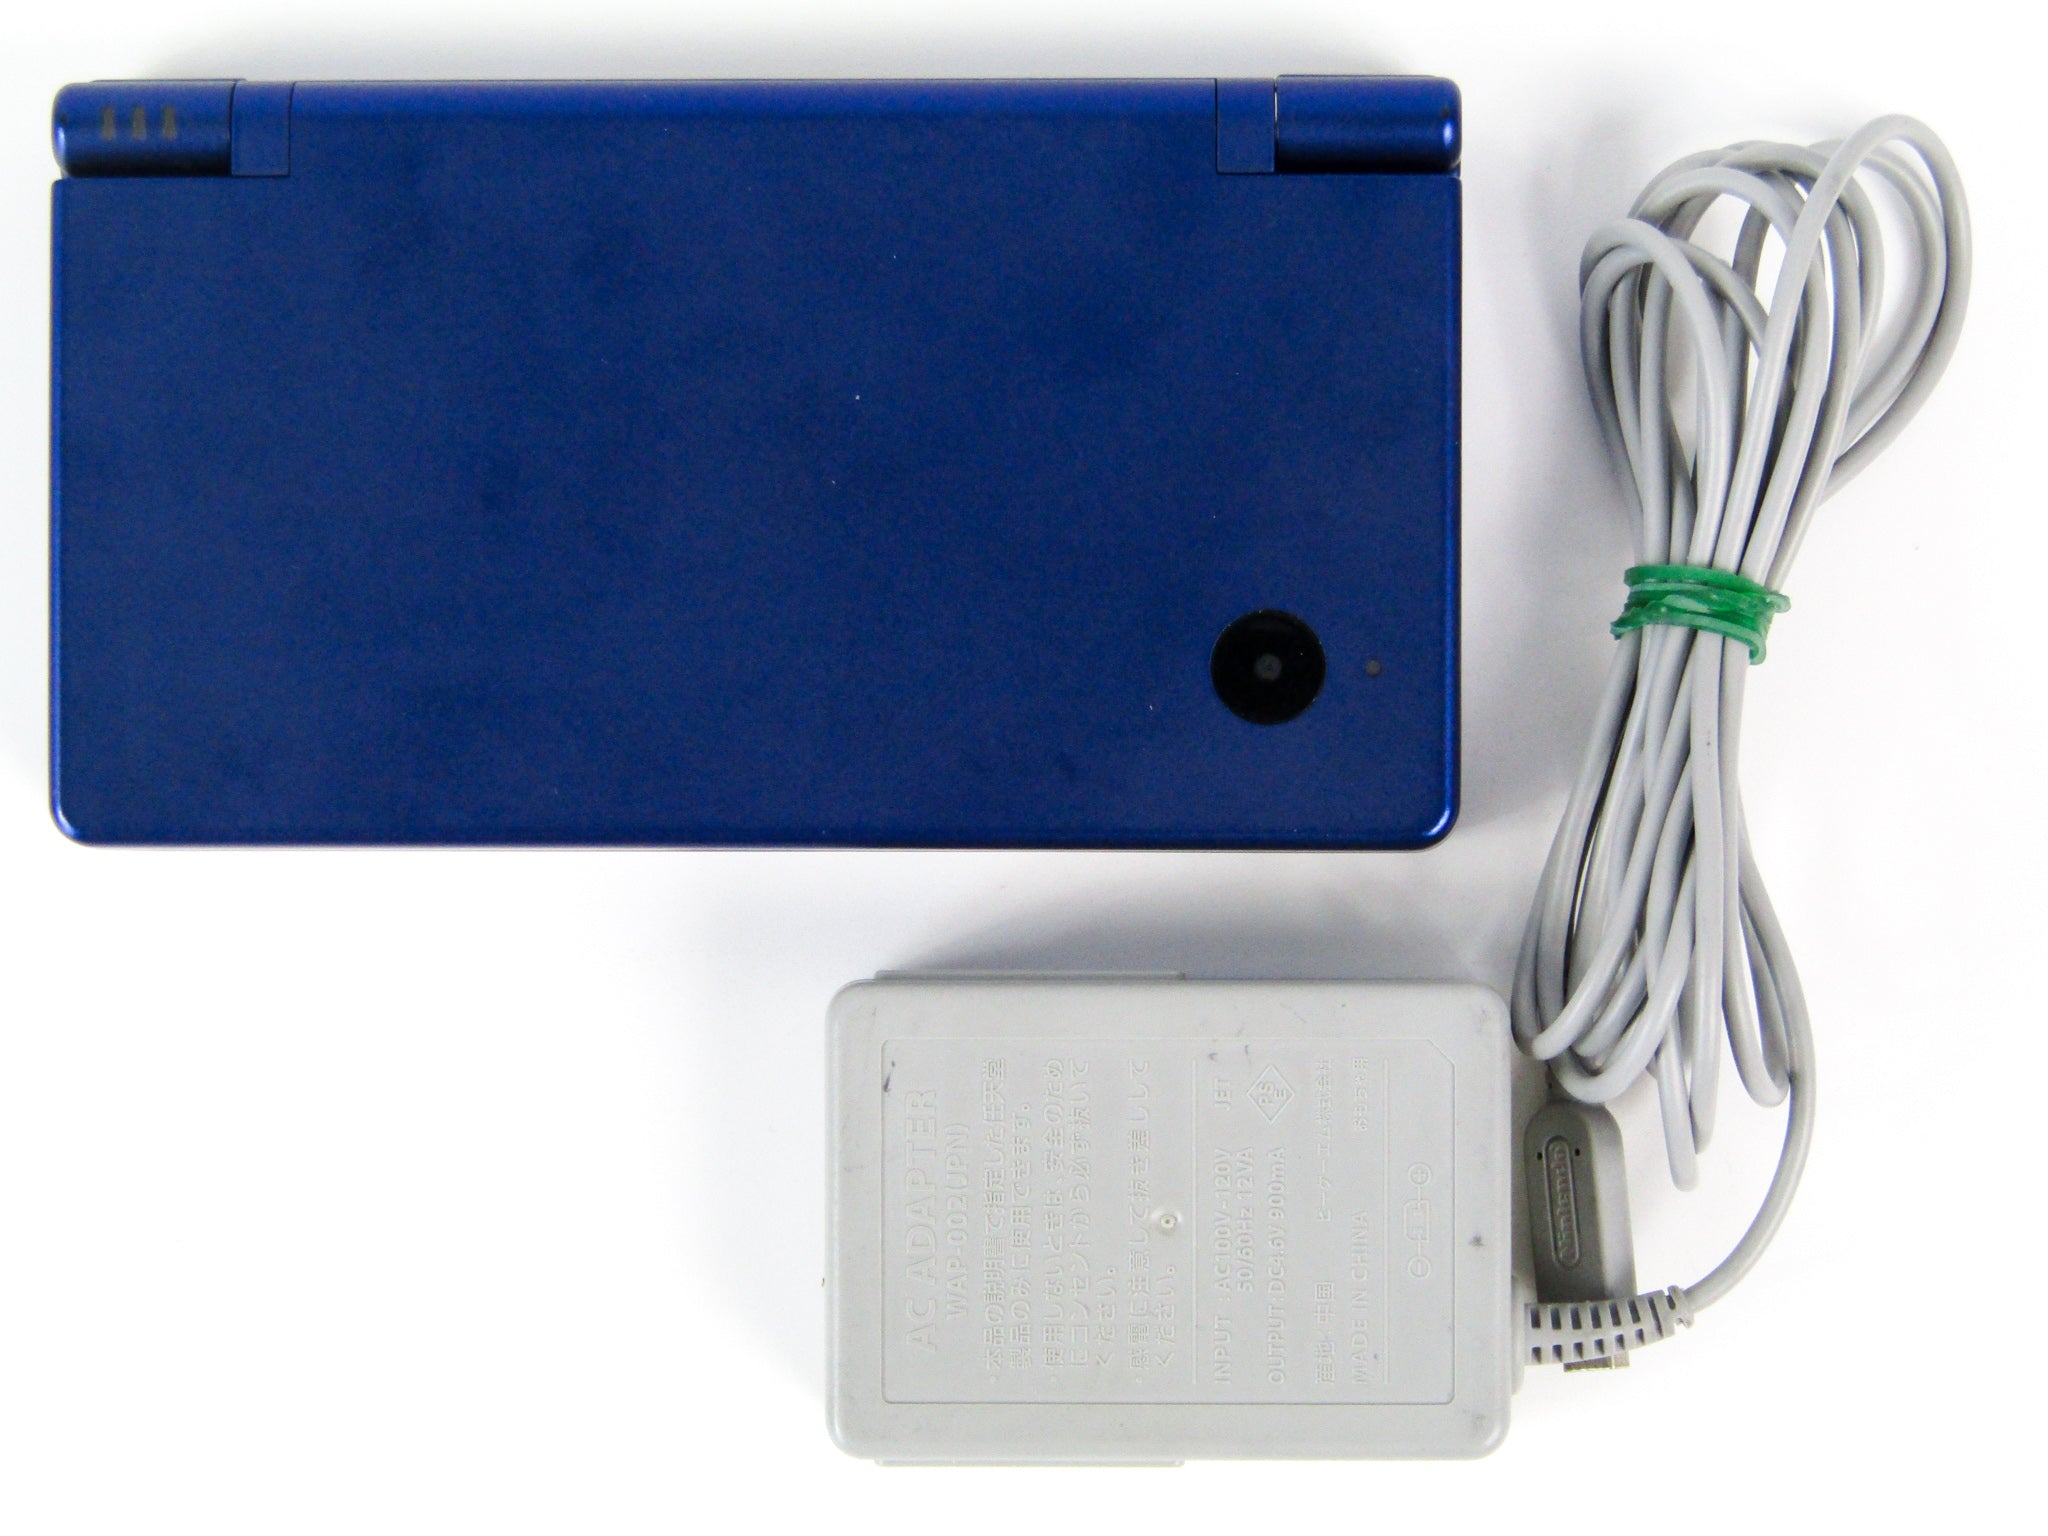 Nintendo DSi Unboxing Pt1 (Blue) 